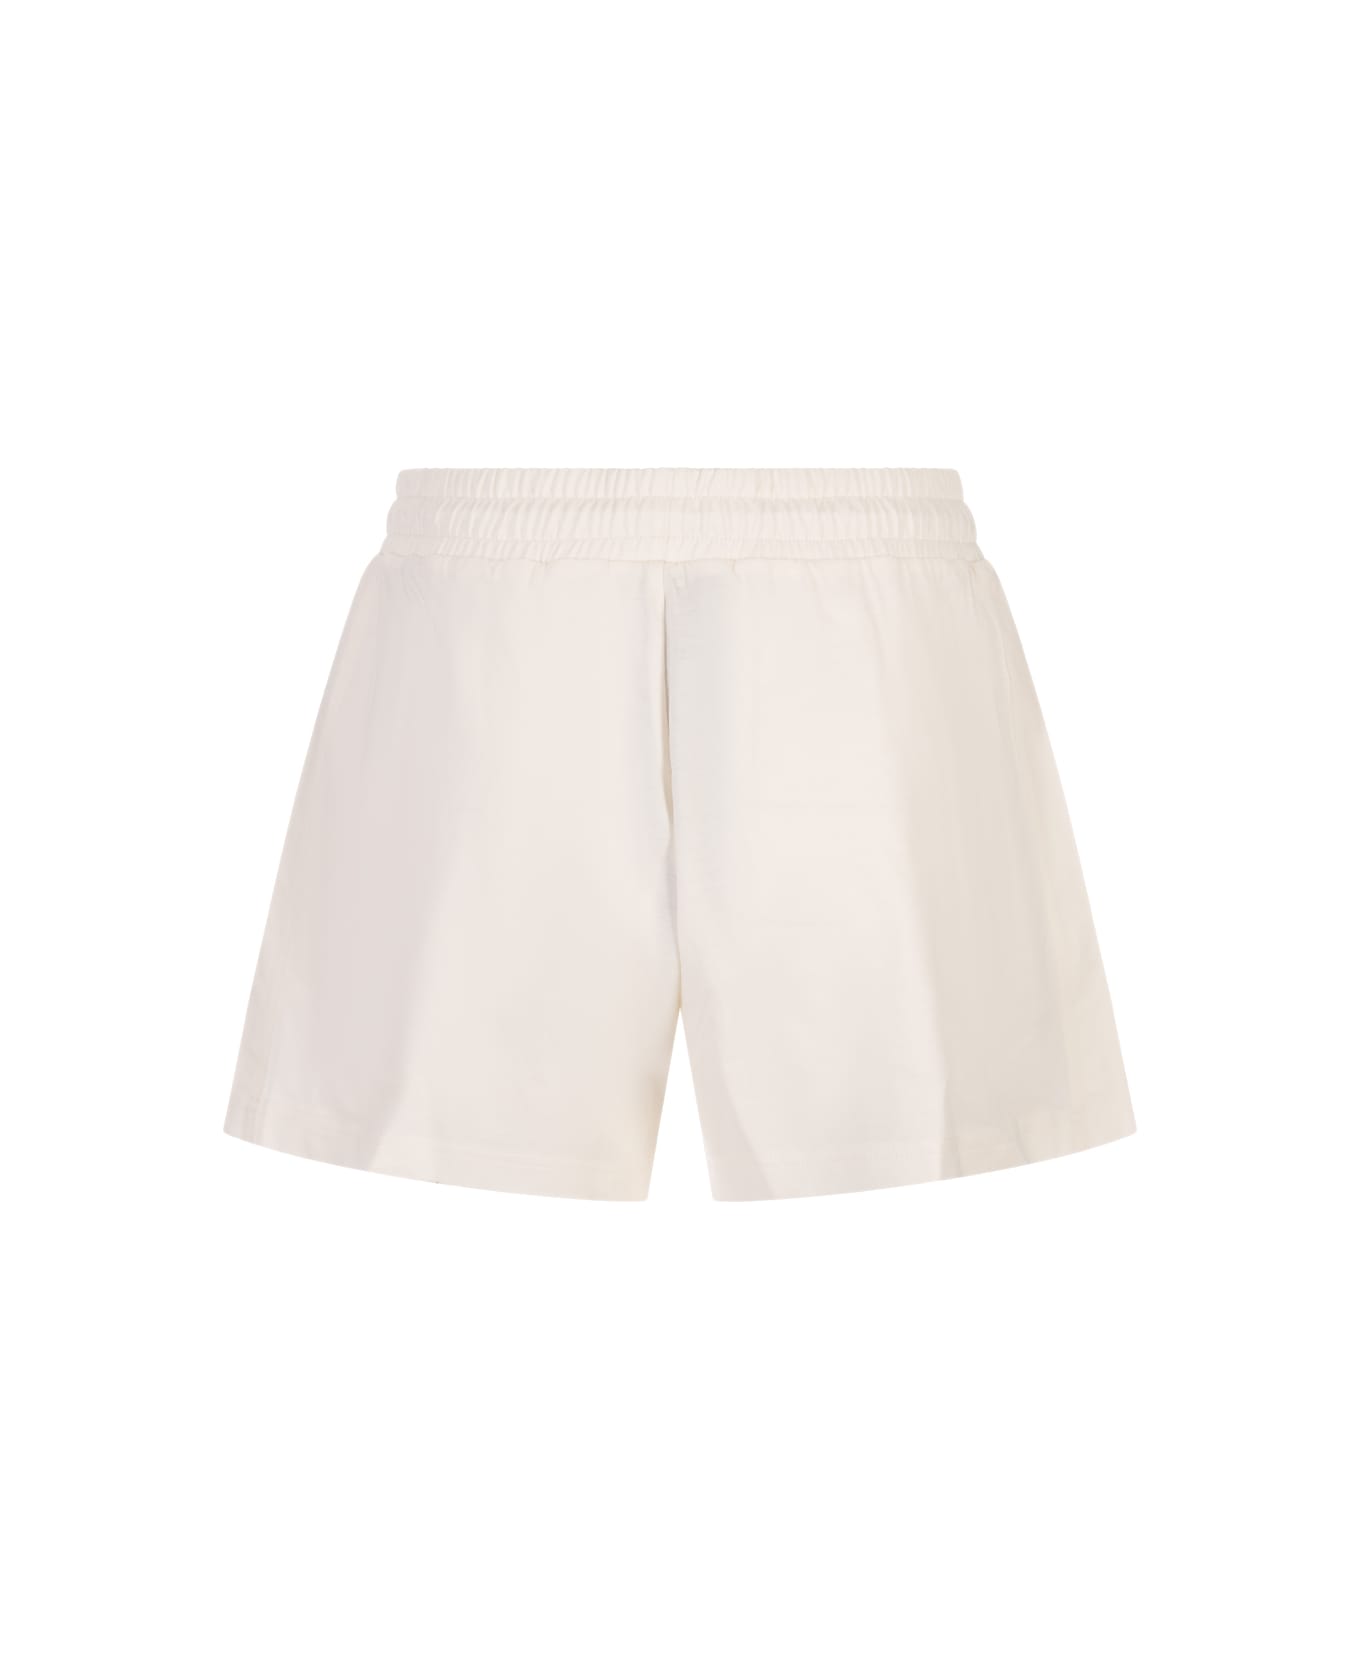 Moncler White Jersey Shorts - White